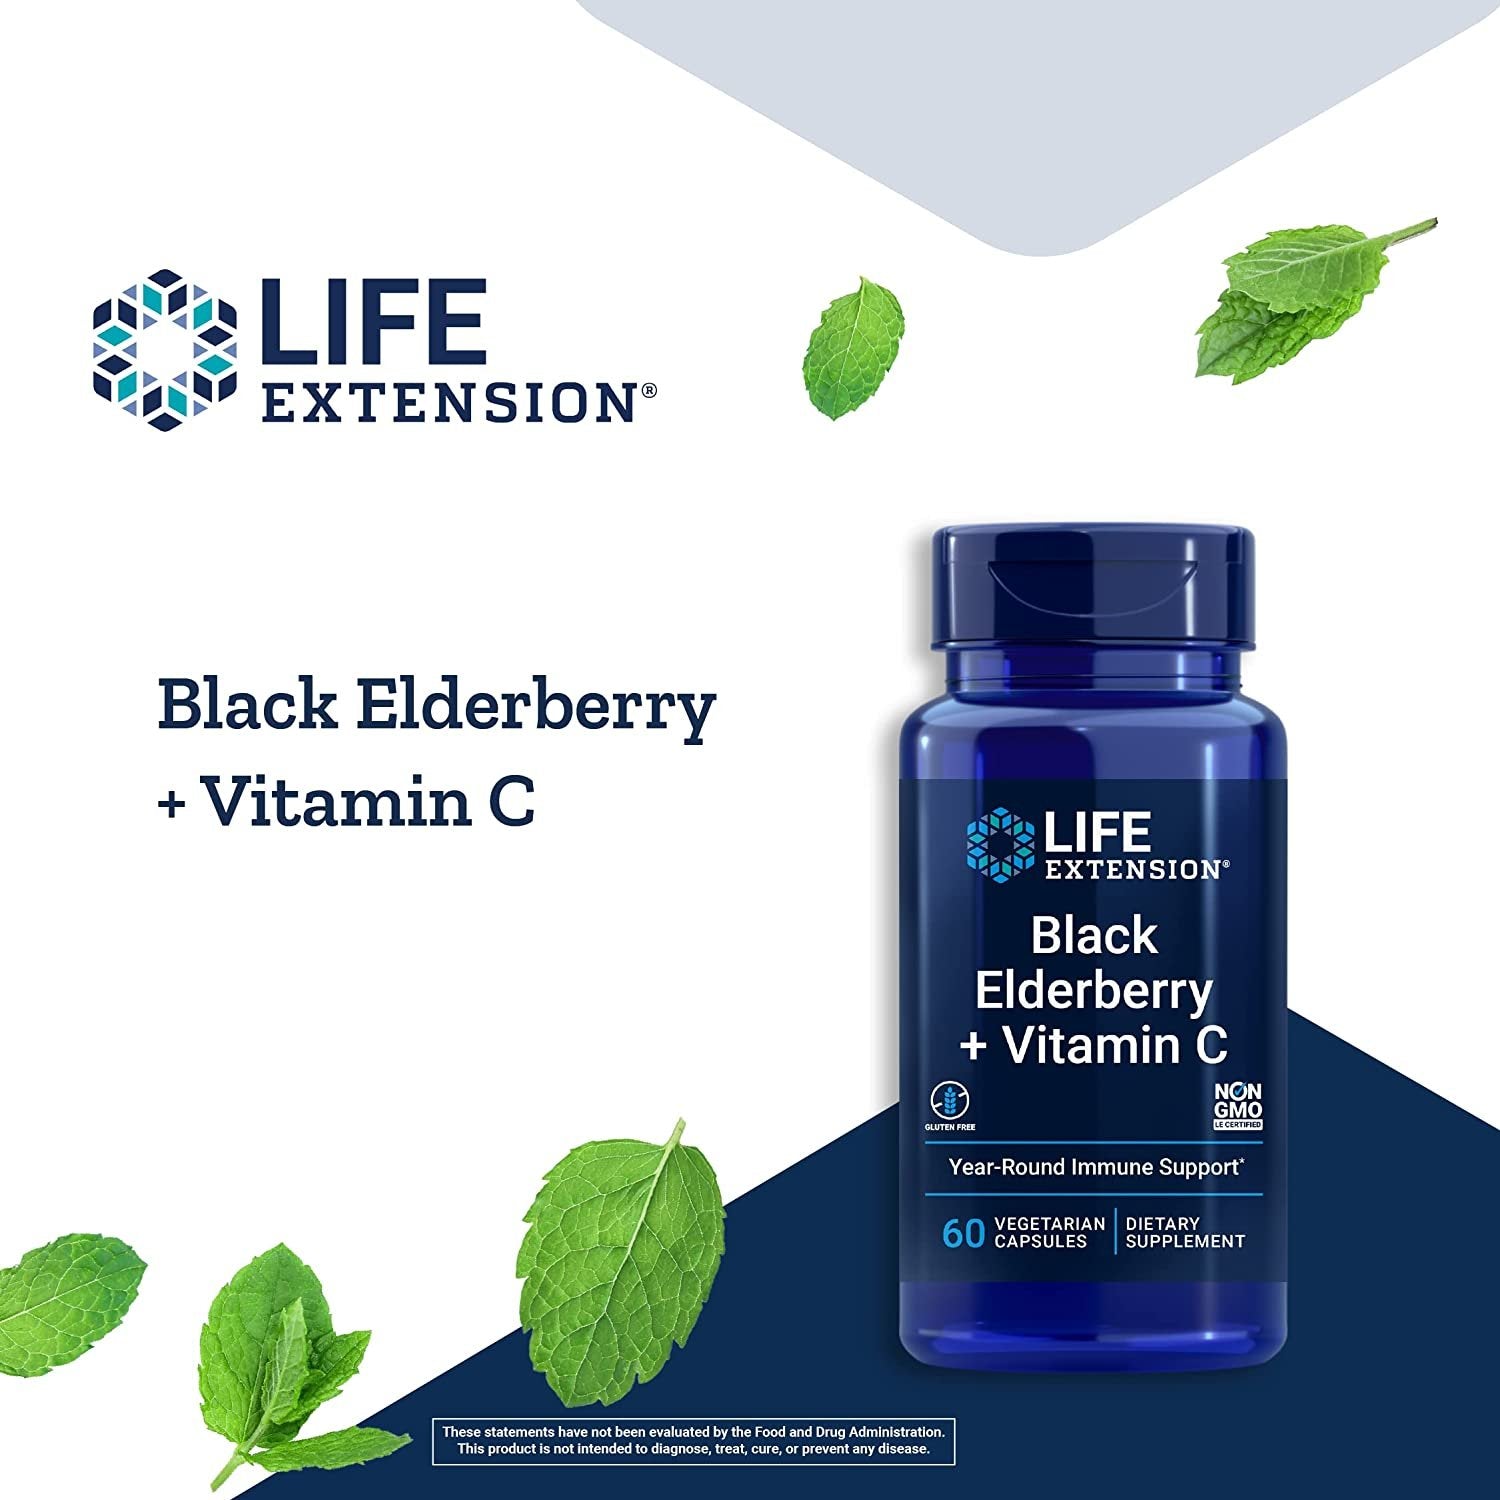 Life Extension Black Elderberry + Vitamin C - Immune System Support, Gluten-Free, Non-GMO - 60 Vegetarian Capsules